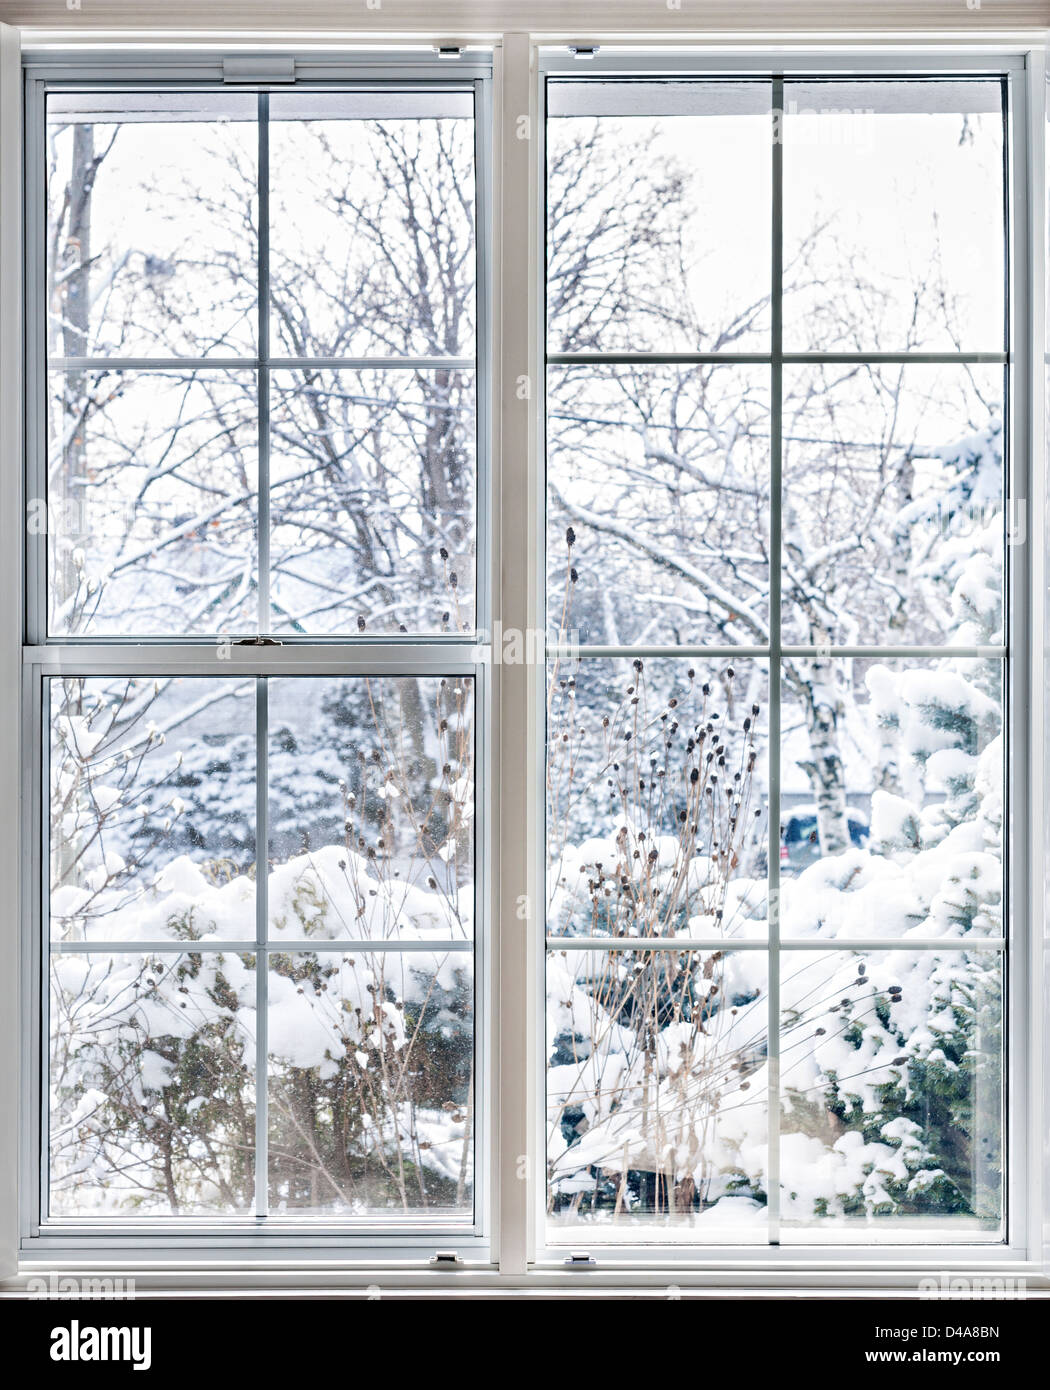 https://c8.alamy.com/compes/d4a8bn/casa-aislada-de-vinilo-con-windows-vista-invernal-de-plantas-y-arboles-nevados-d4a8bn.jpg